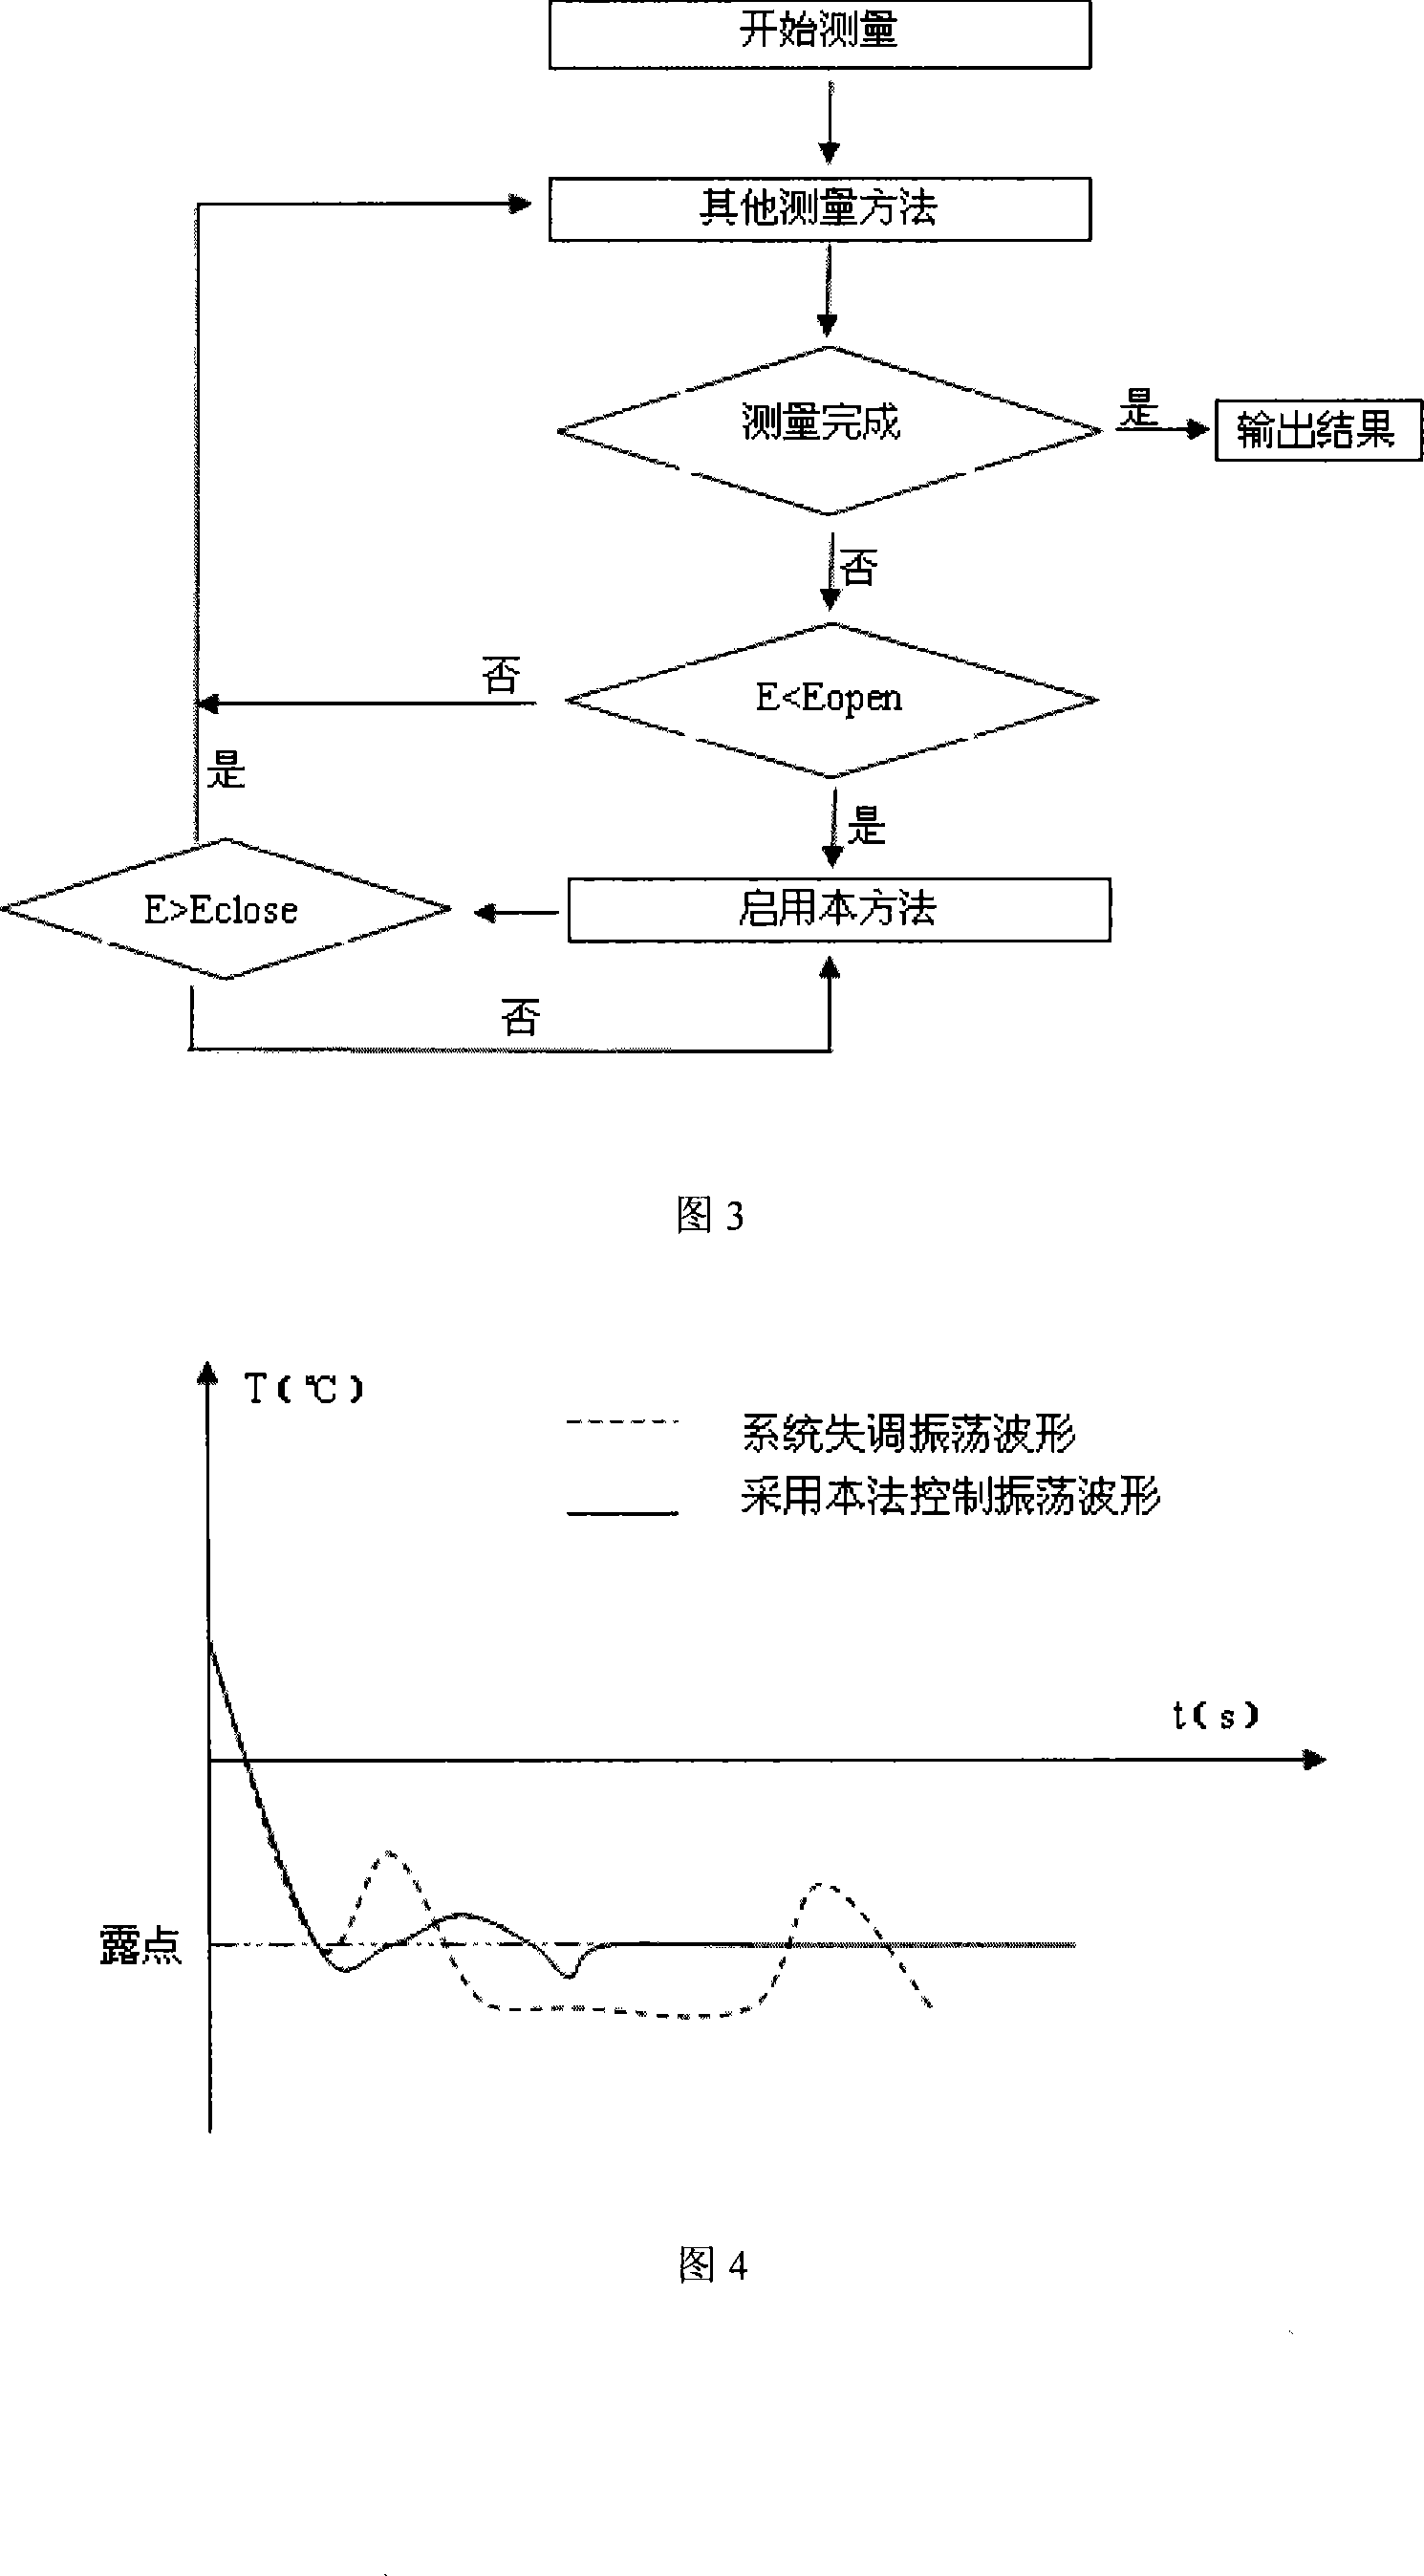 Chilled-mirror type dew point instrument control method